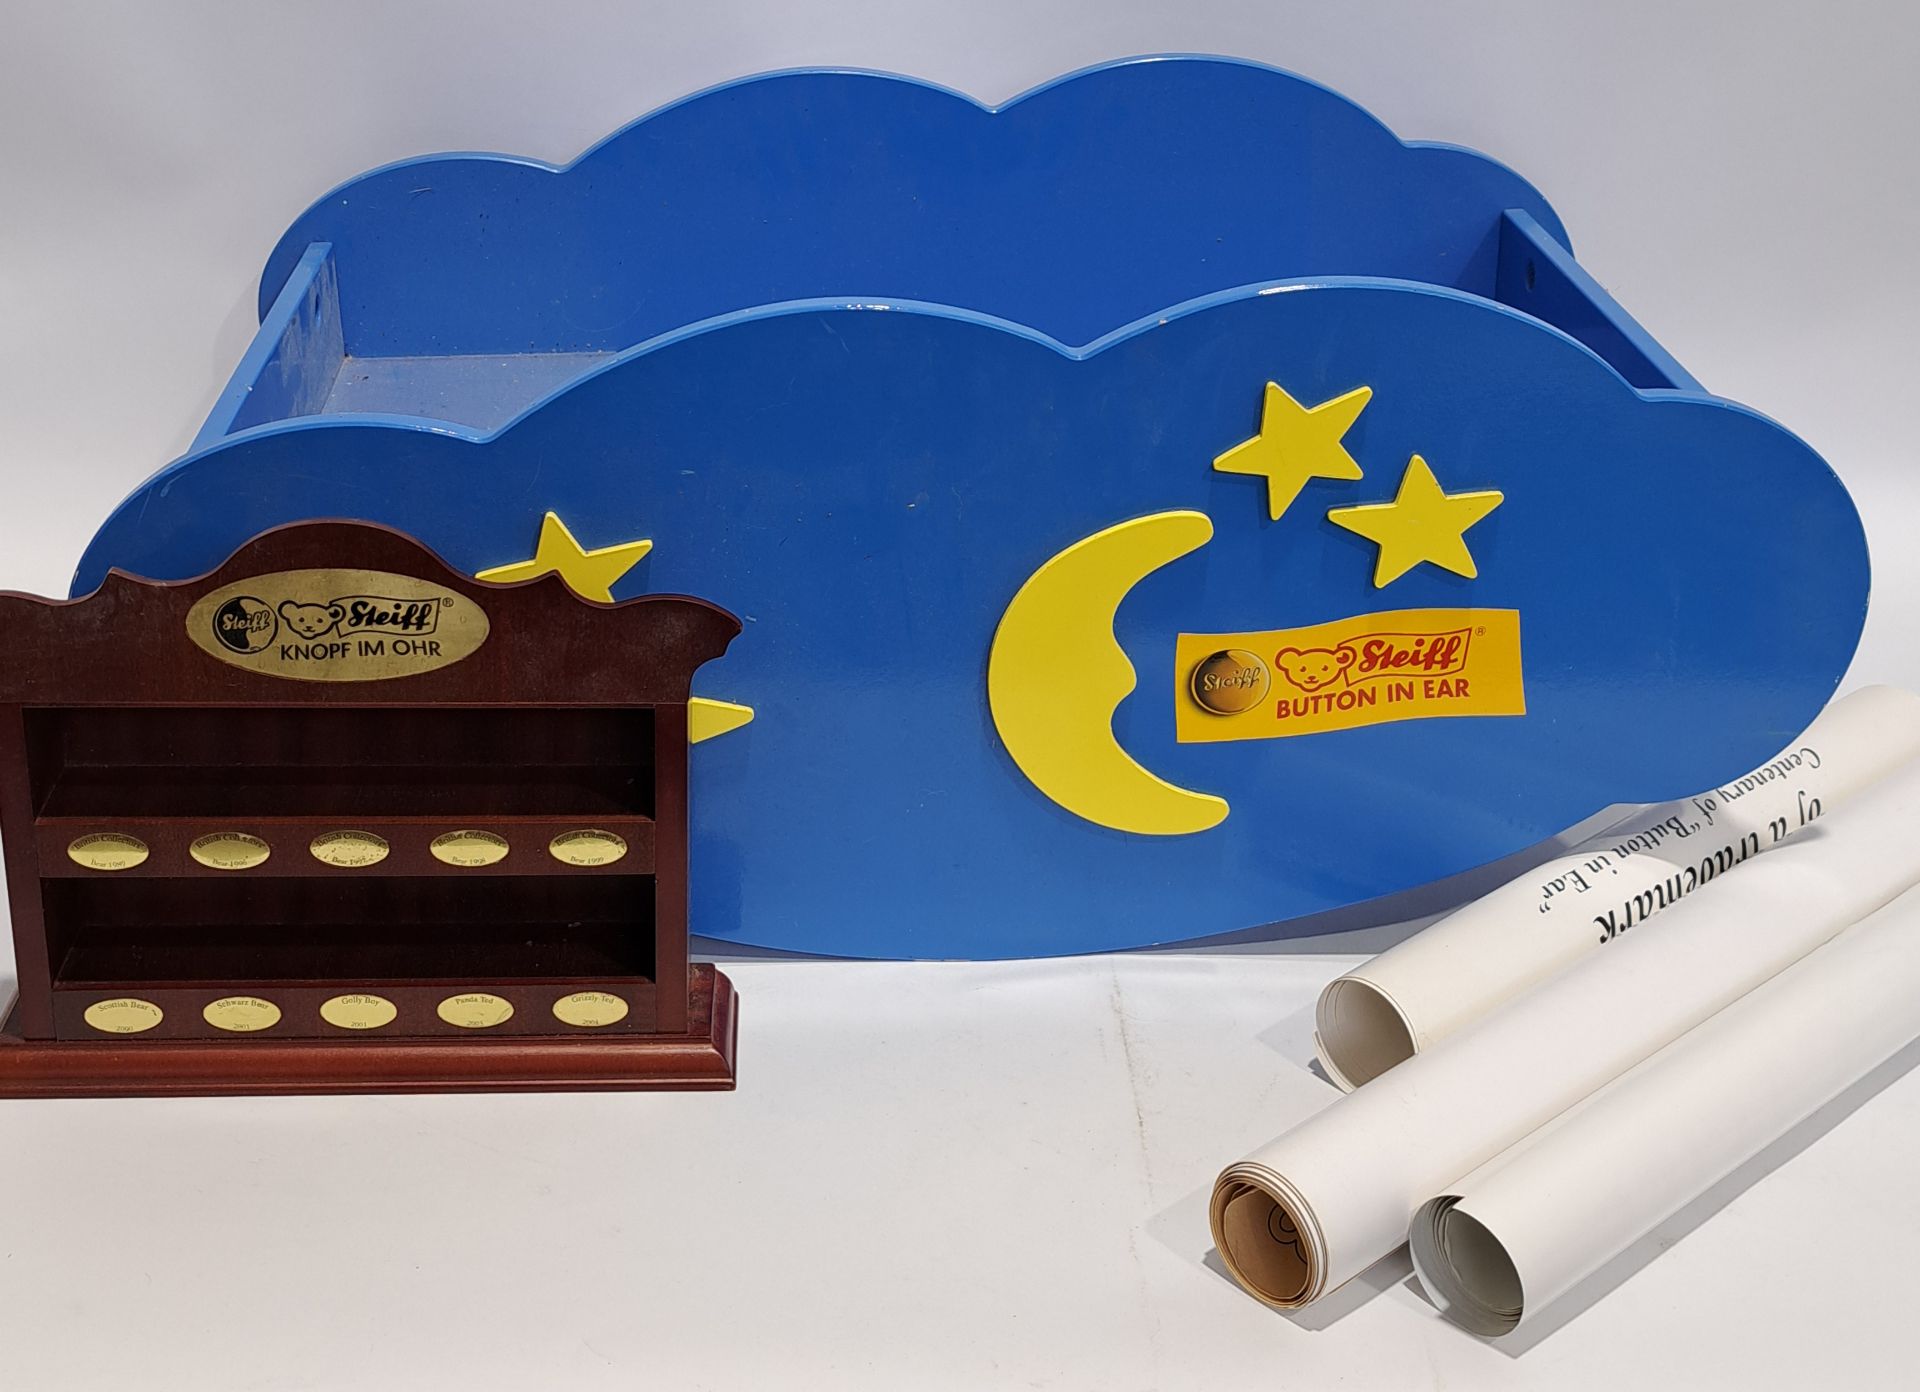 Steiff display cloud rocker, plus wooden display case and Steiff posters